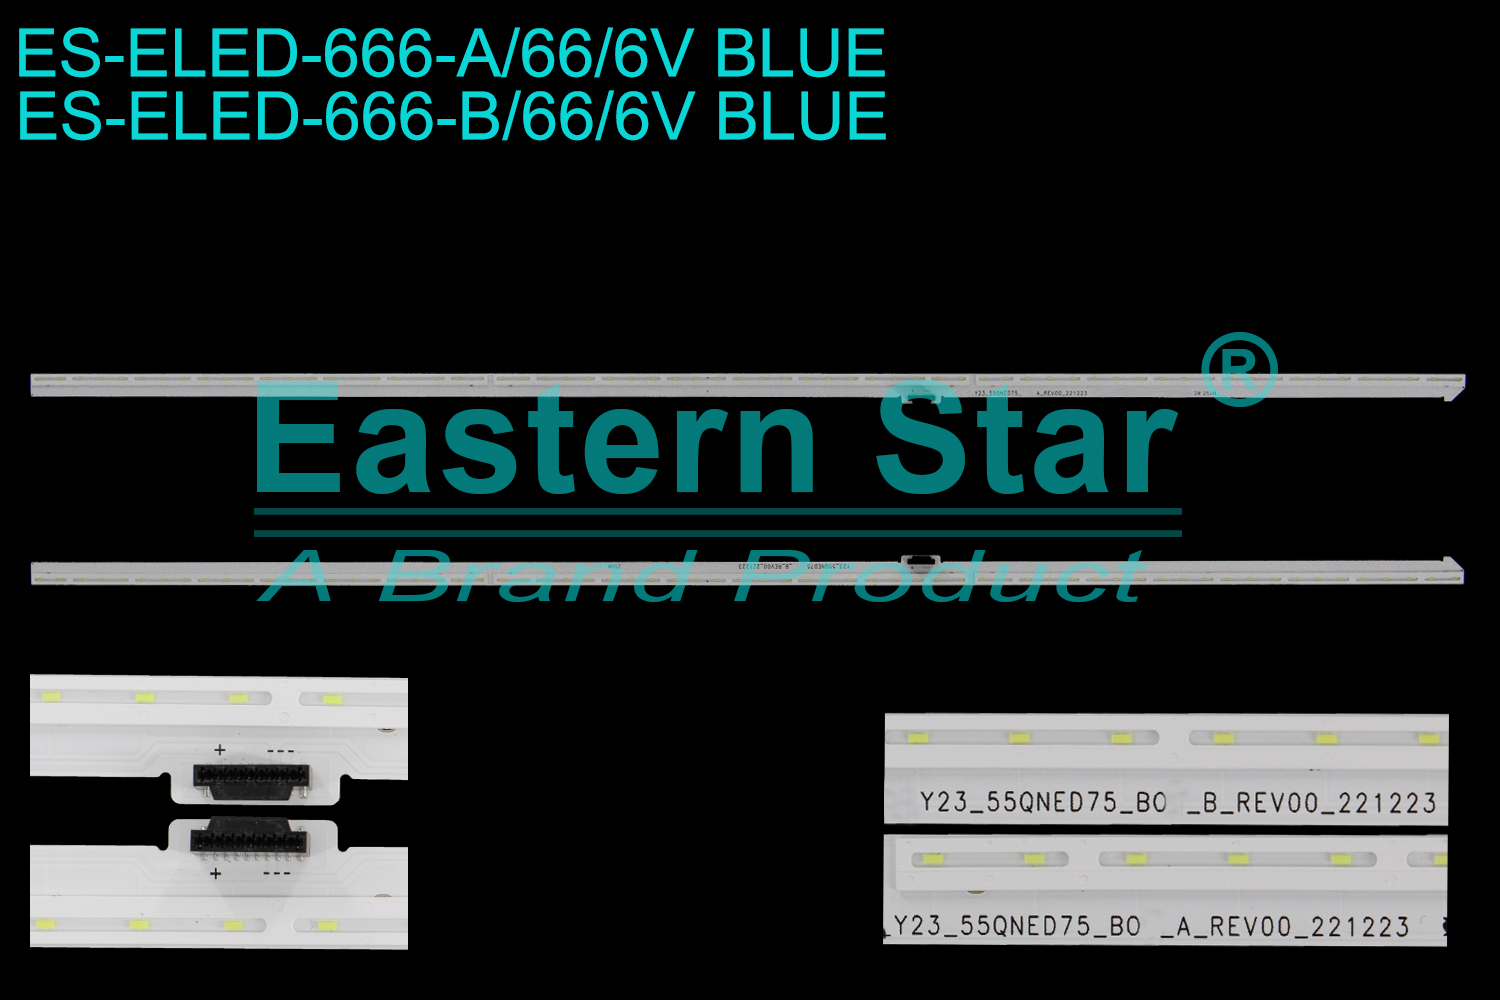 ES-ELED-666 ELED/EDGE TV backlight use for 55'' Lg A: Y23_55QNED75_BO_A_REV00_221223 2306 2W 25UM   B: Y23_55QNED75_BO_B_REV00_221223 2306 2W 25UM LED STRIPS(/)